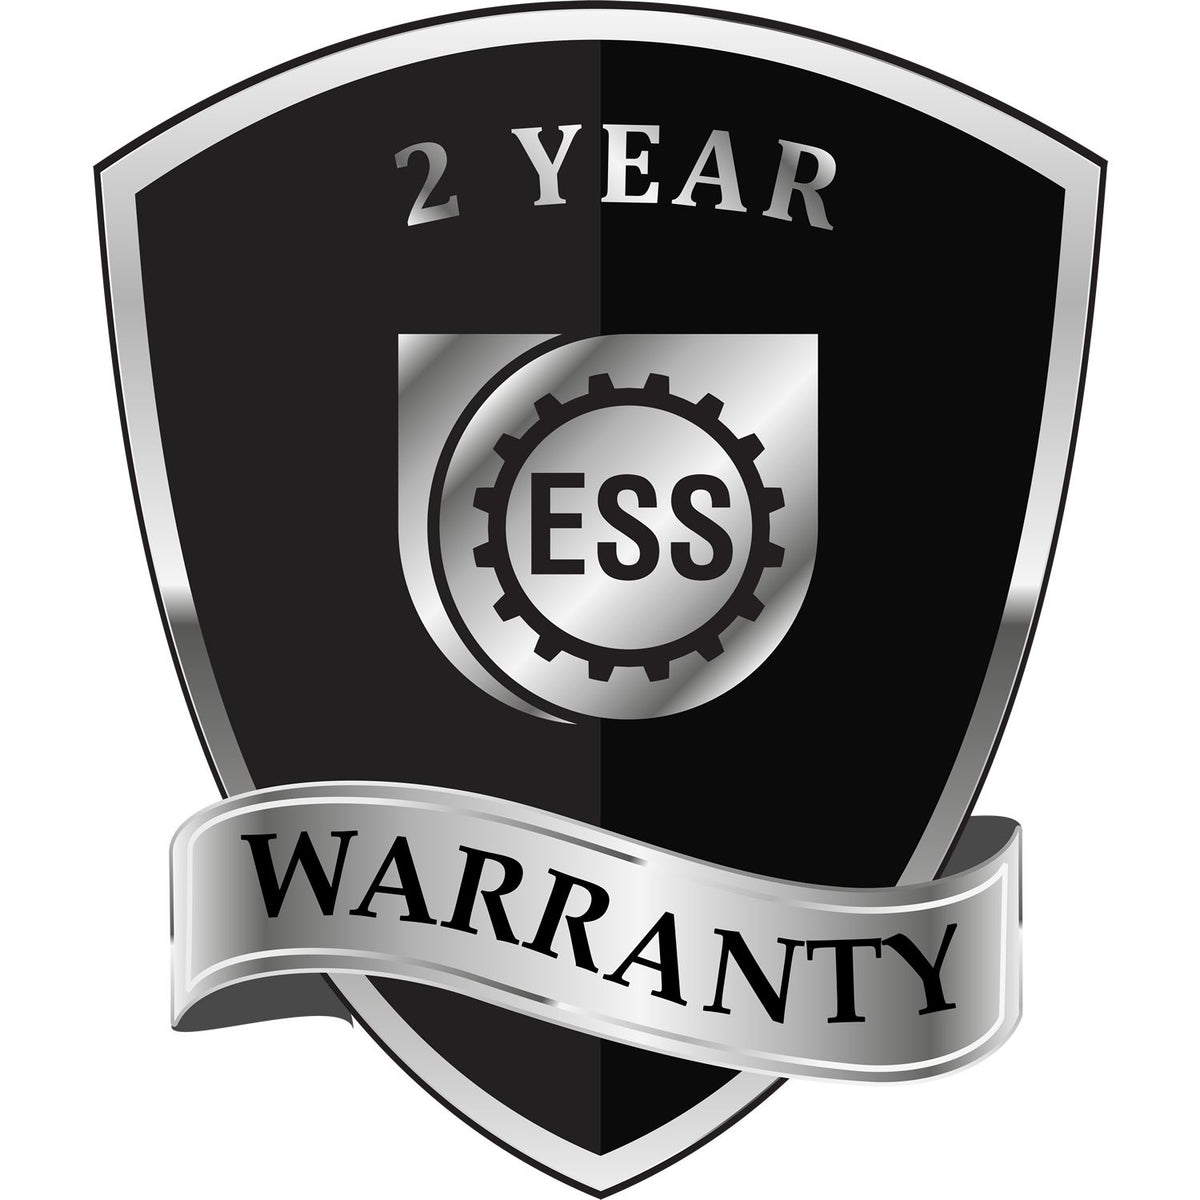 A black and silver badge or emblem showing warranty information for the Hybrid Nevada Landscape Architect Seal